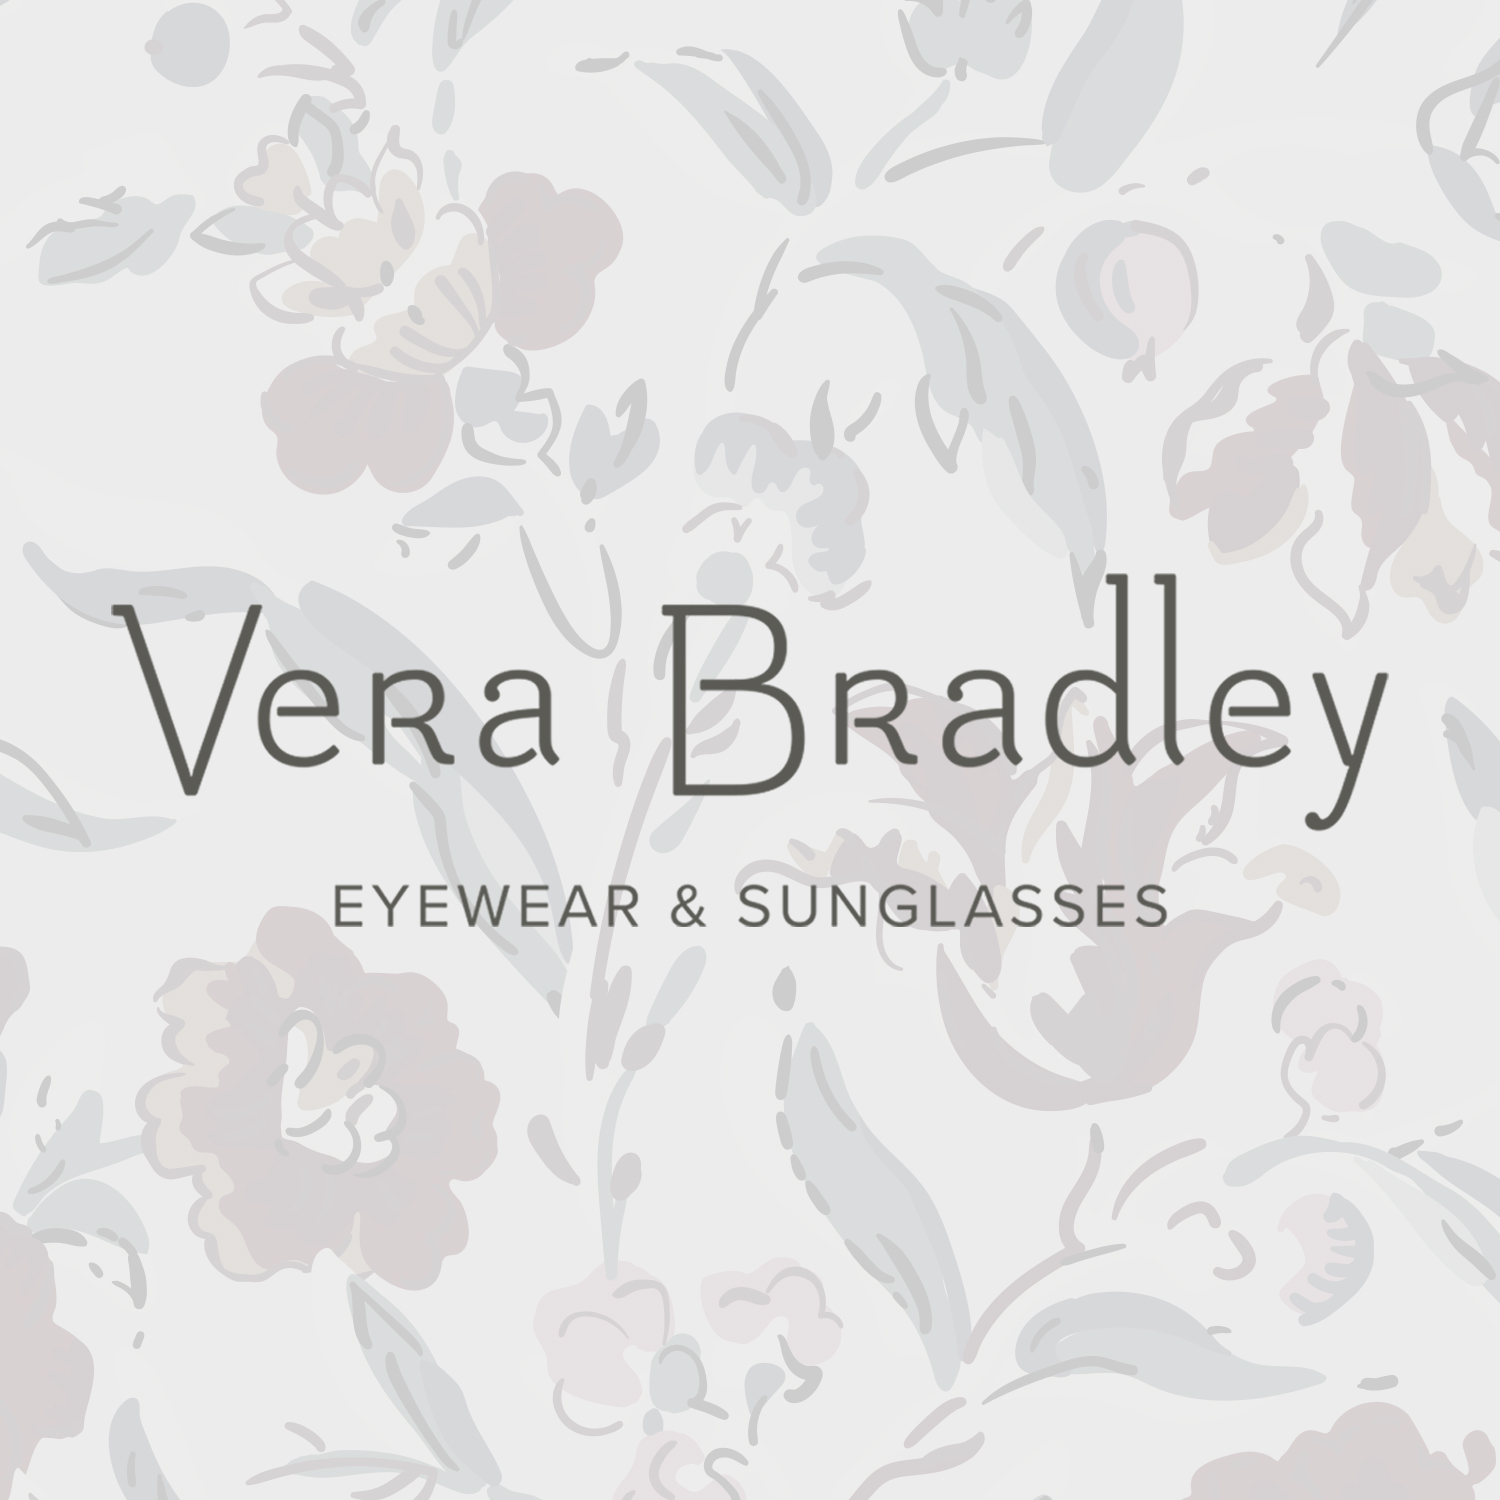 Vera Bradley - The McGee Group